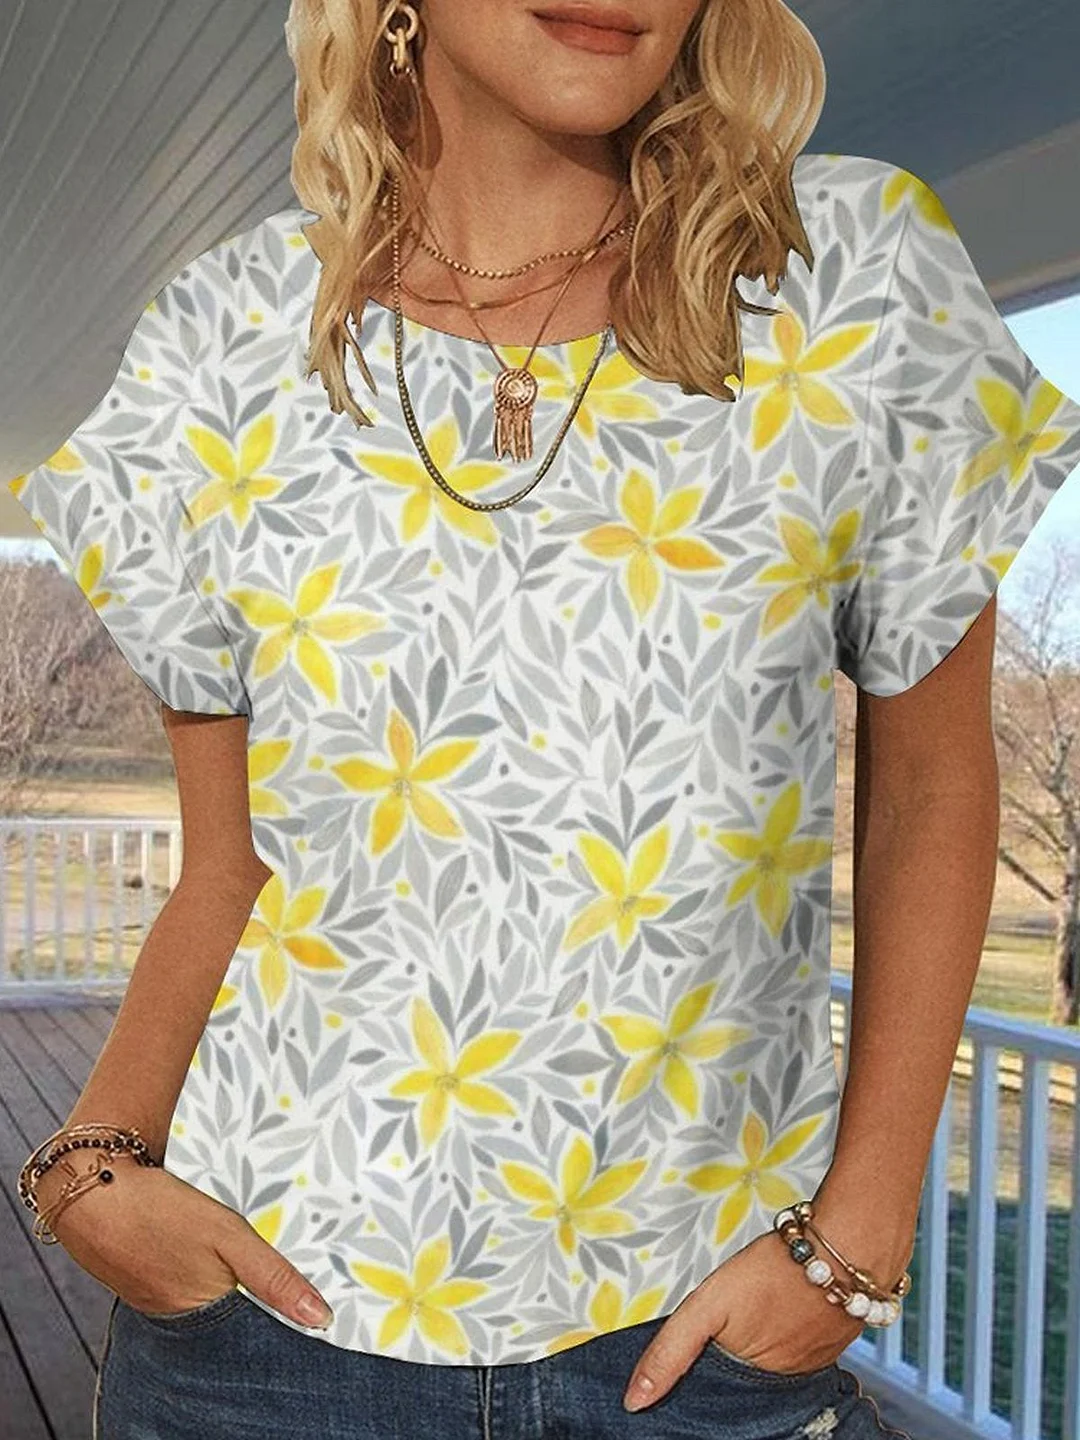 Women's Scoop Neck Short Sleeve Yellow Floral Printed Top